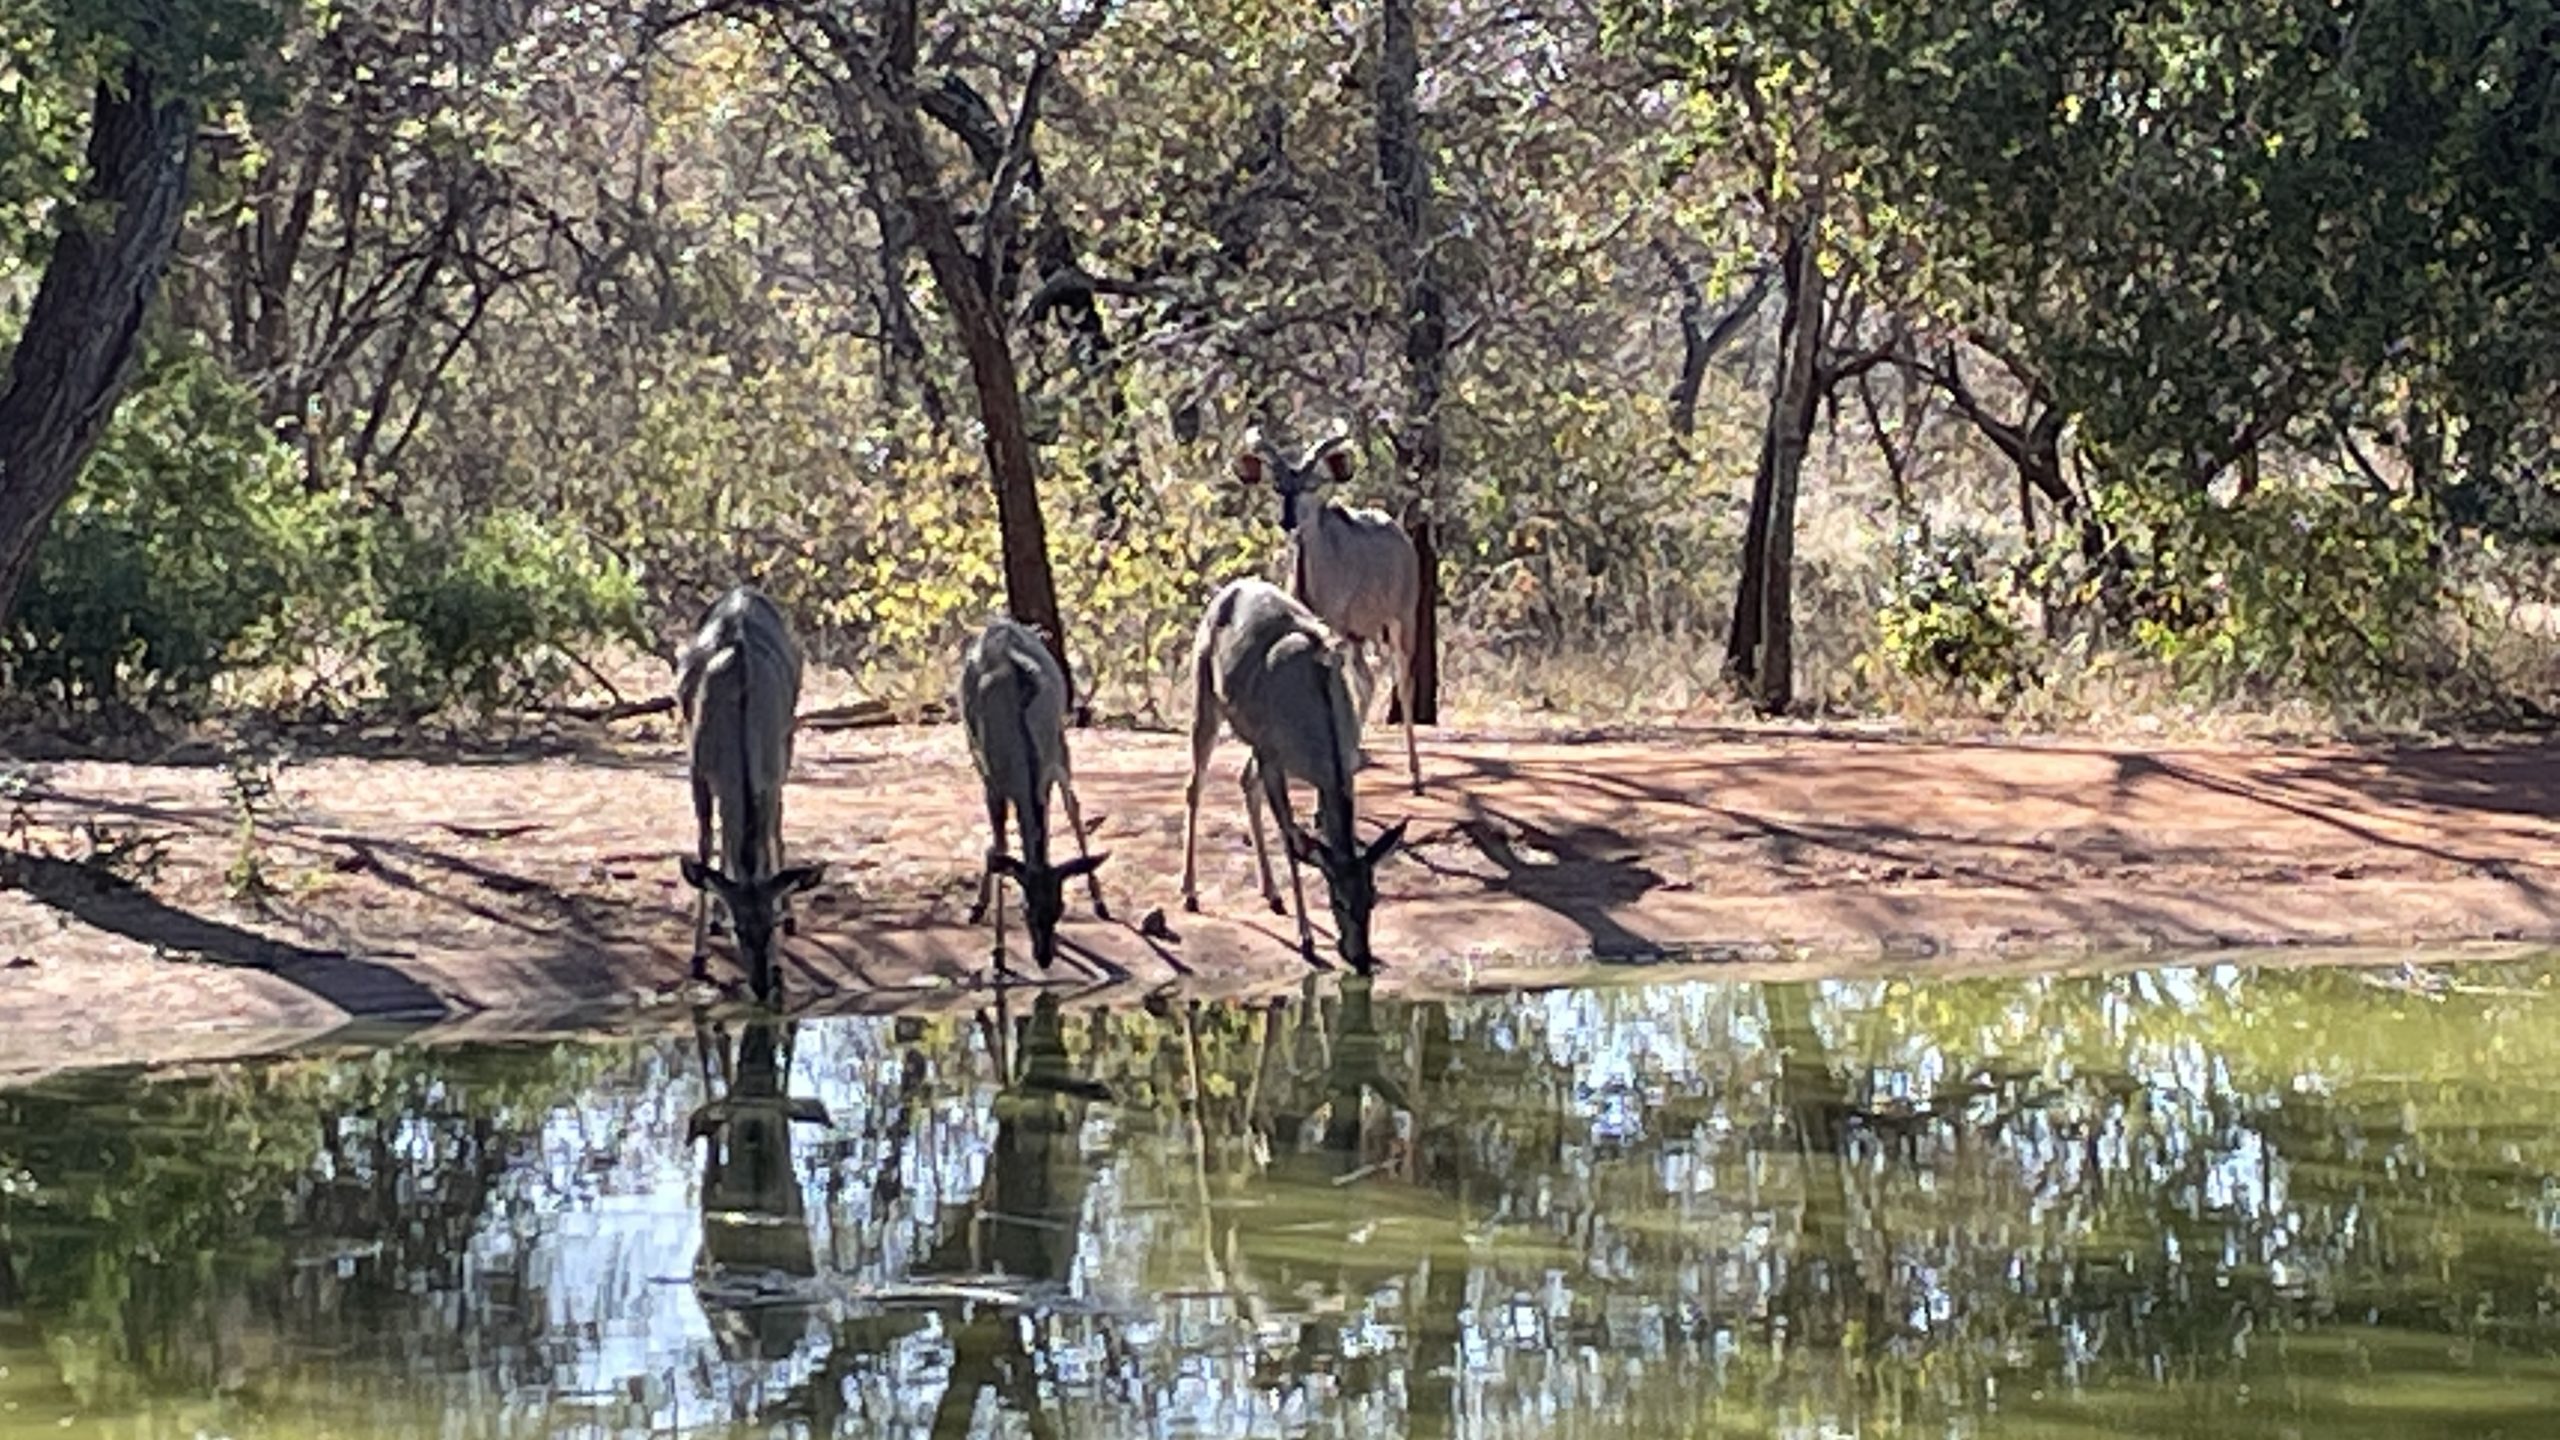 Sabatana Private Reserve Antelopes Drinking from Crocodile Swamp Point Hacks by Daniel Sciberras